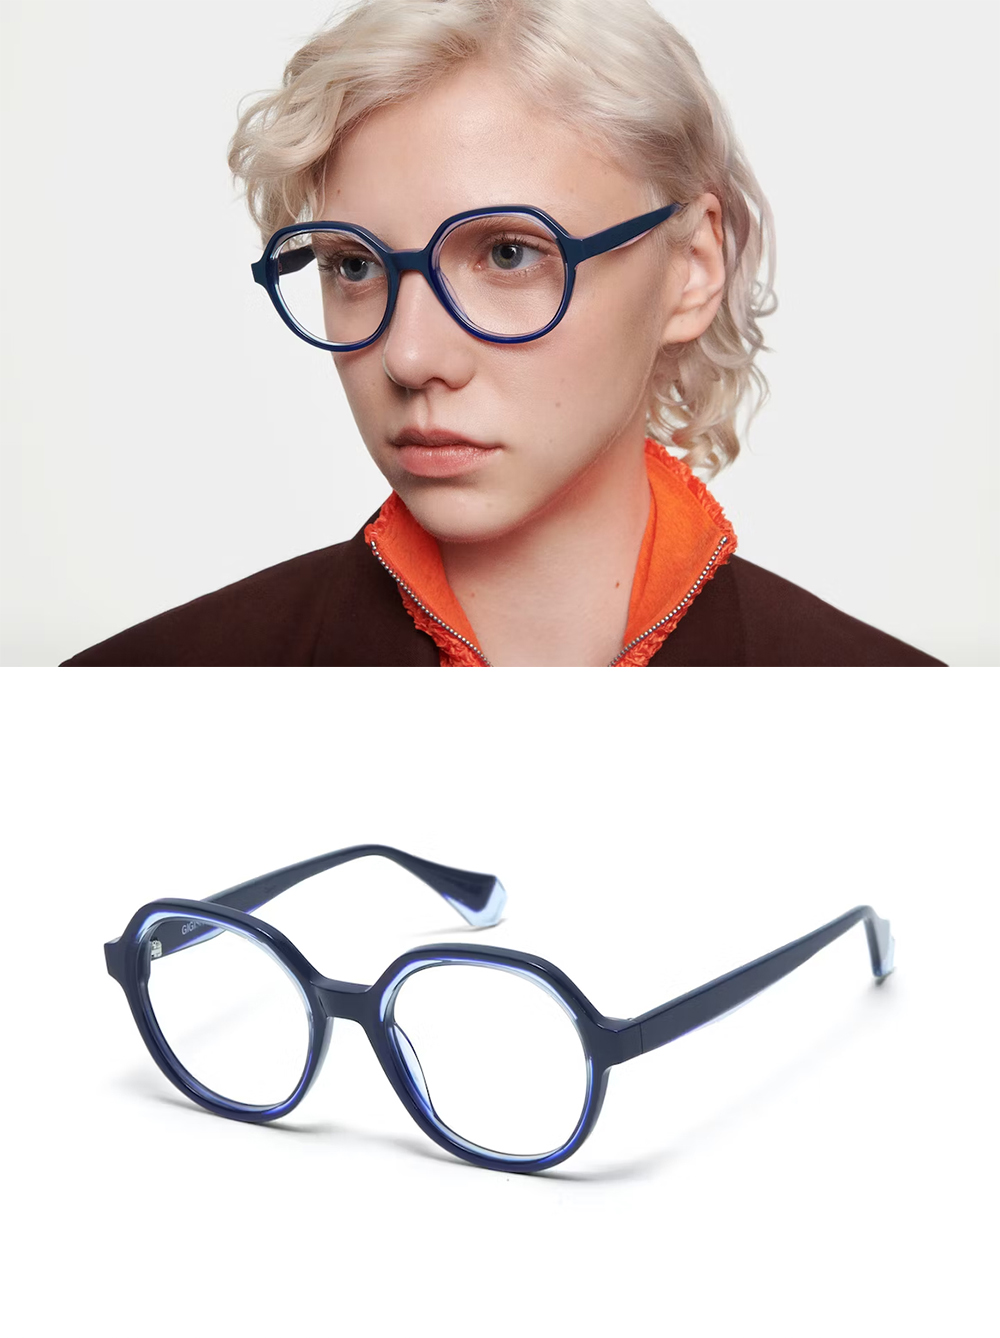 GIGI Studios 歐美俏皮內圈透明造型粗圓框光學眼鏡